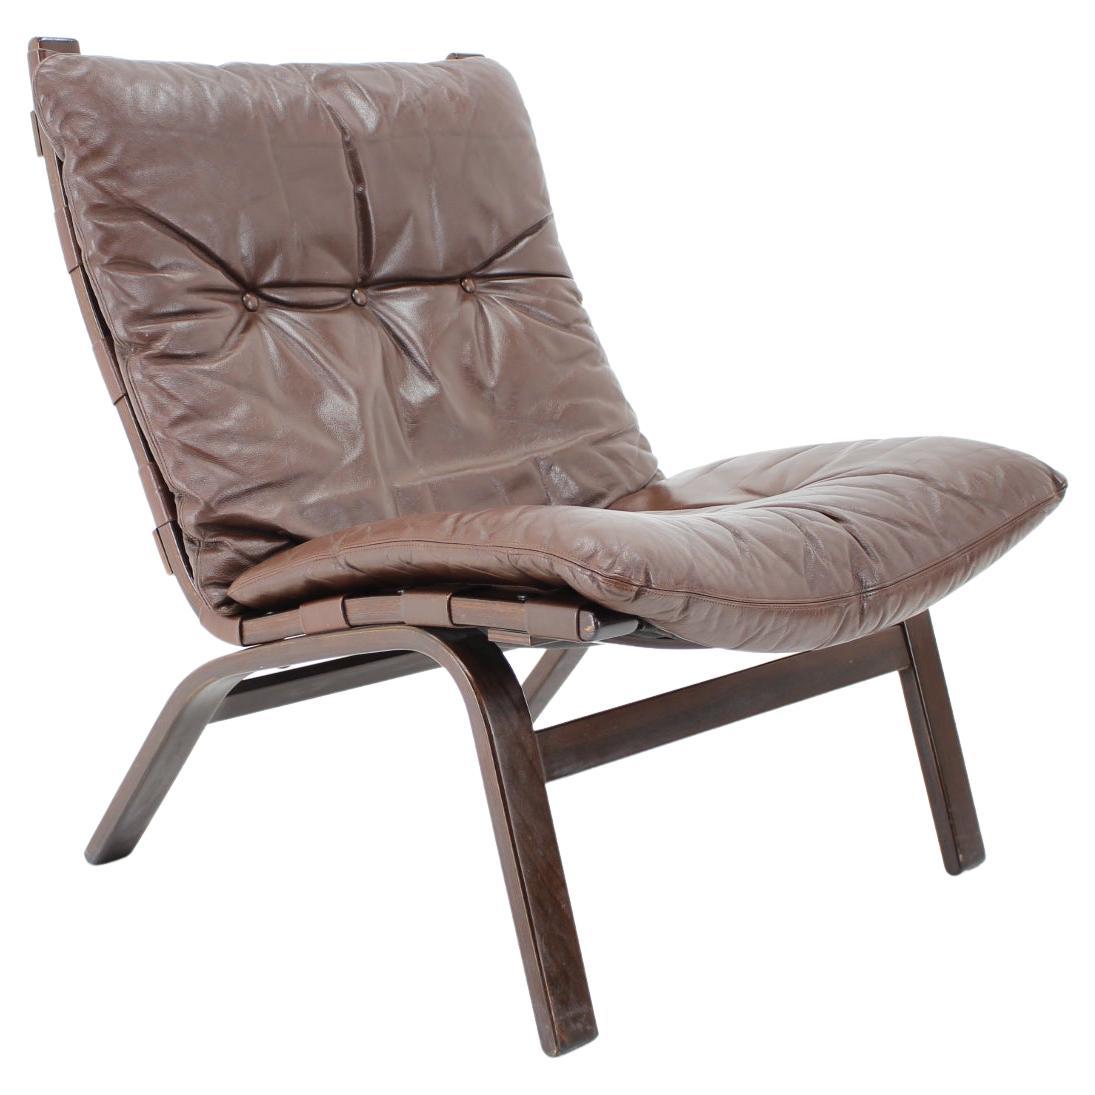 1970s Farstrup Leather Lounge Chair, Denmark